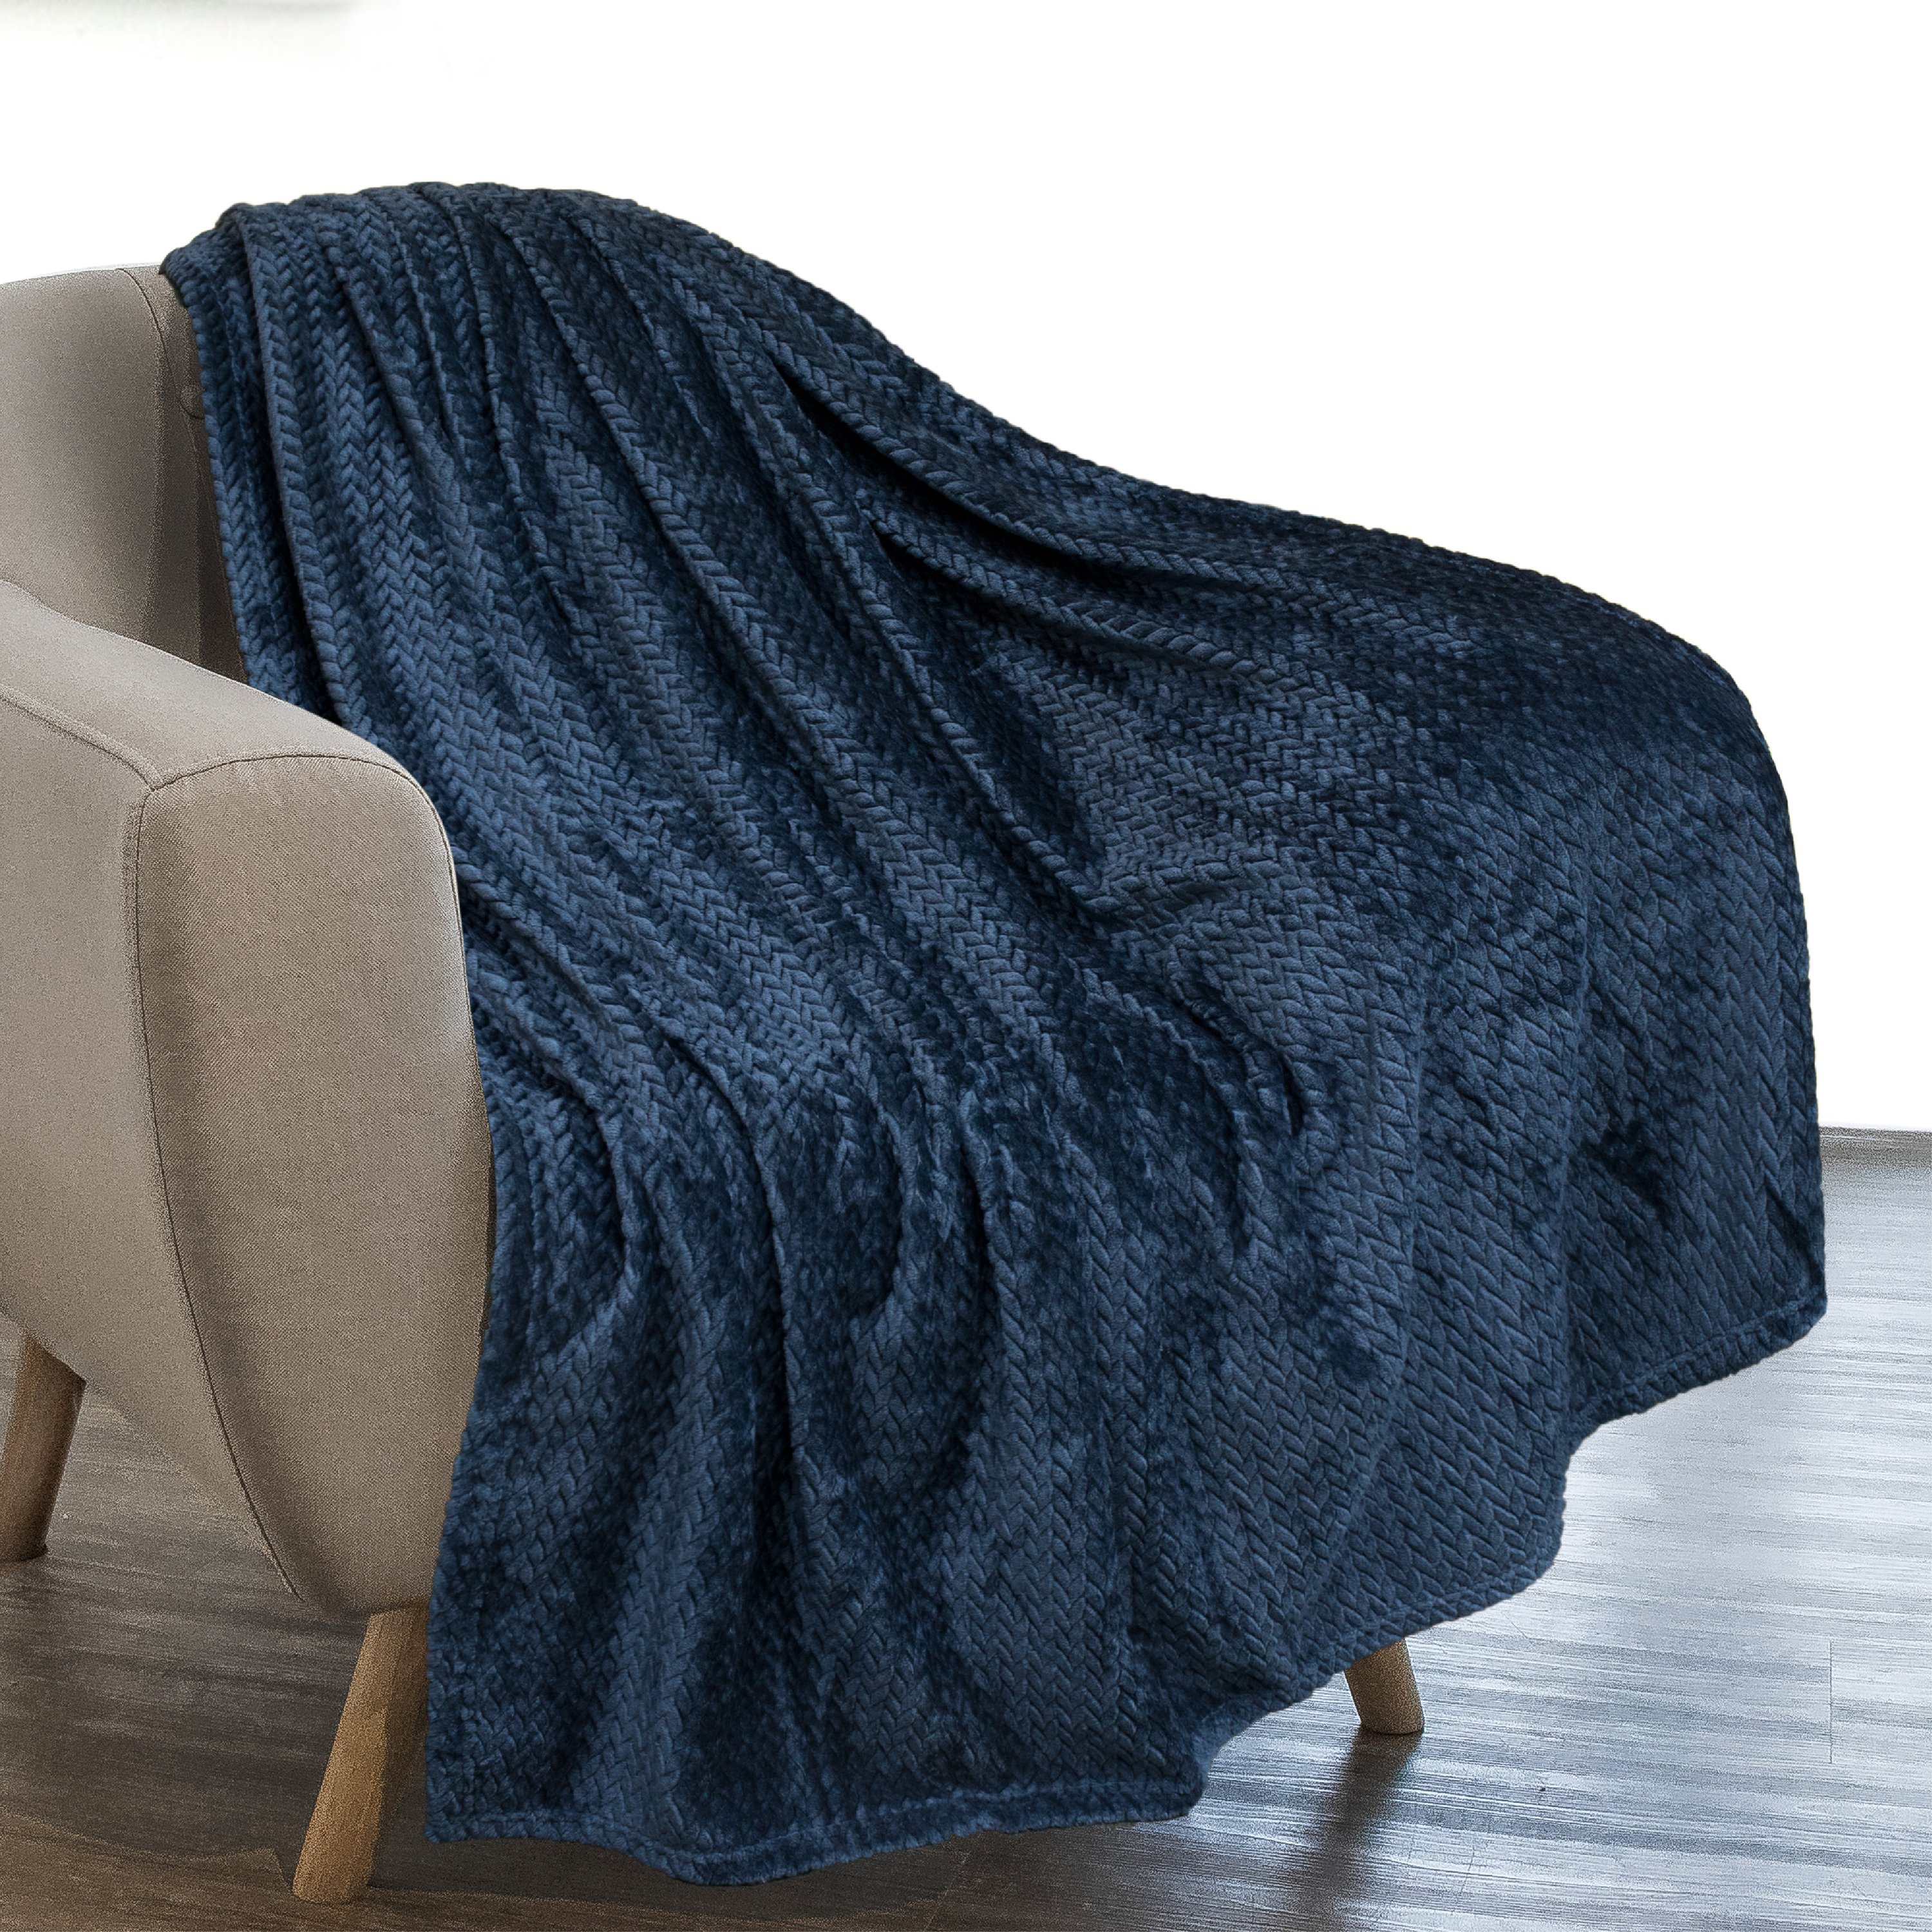 Dark Blue Indian Pattern Throw Blanket Comfy Premium Flannel Fleece Sofa Blanket Comfortable Thermal Noon Break Blankets Durable Lap Blanket Warm Throw Wrap Blanket for All Season 50x40 